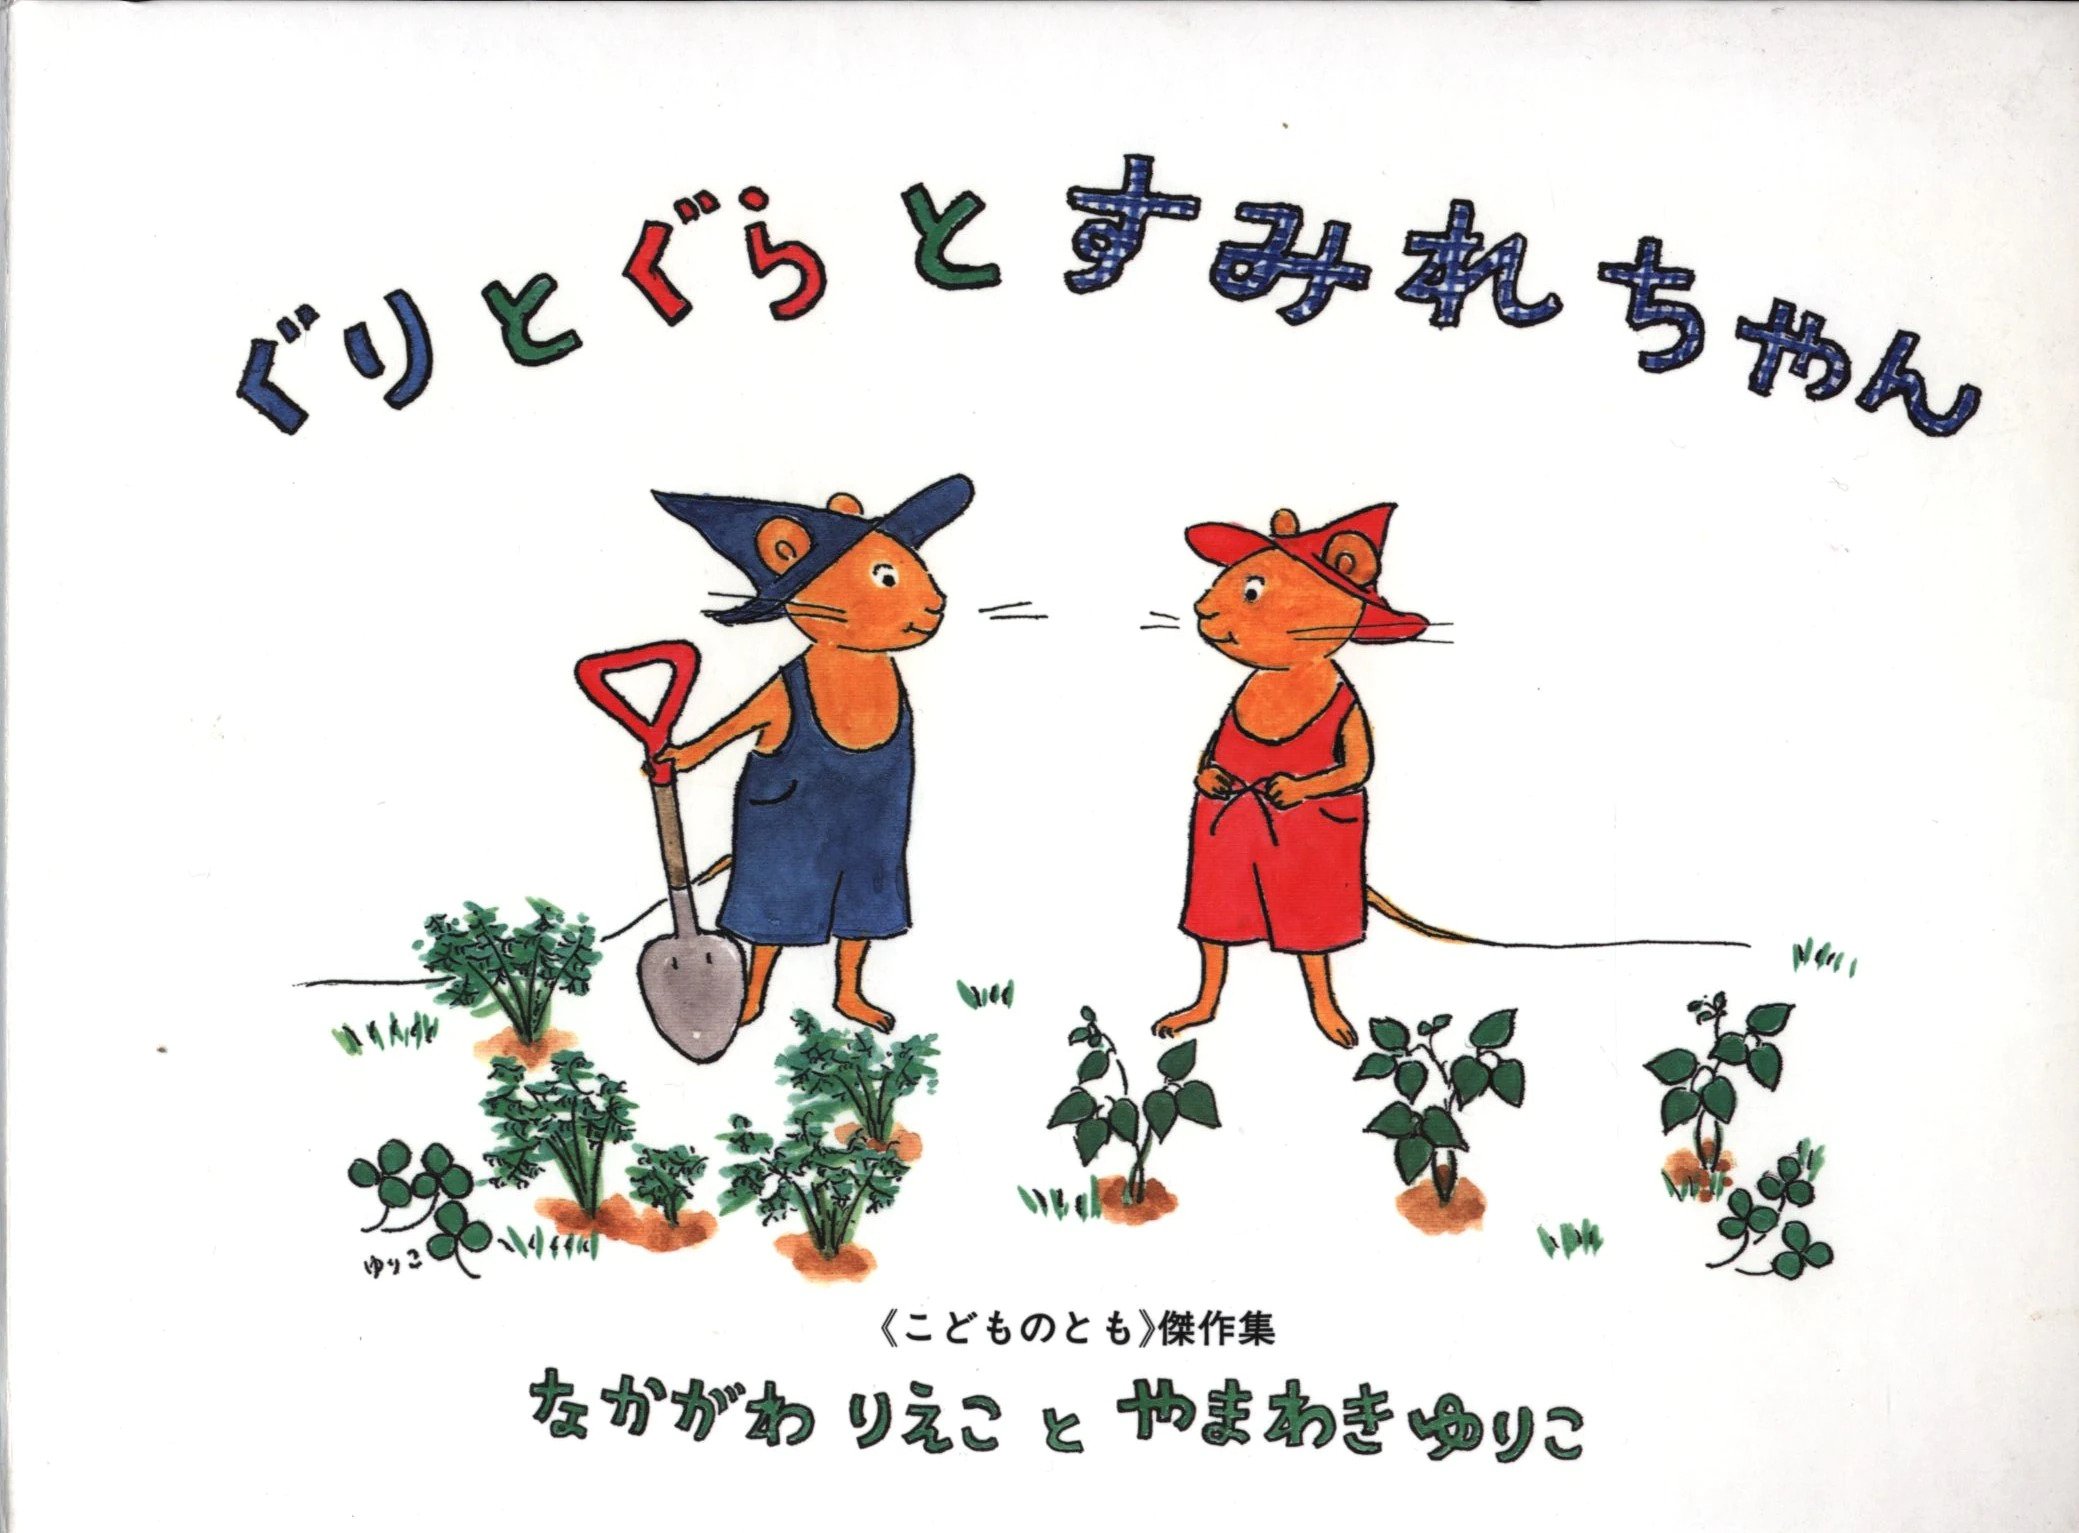 Yuriko Yamawaki, Whose Works Became Ghibli Museum Anime Shorts, Passes Away